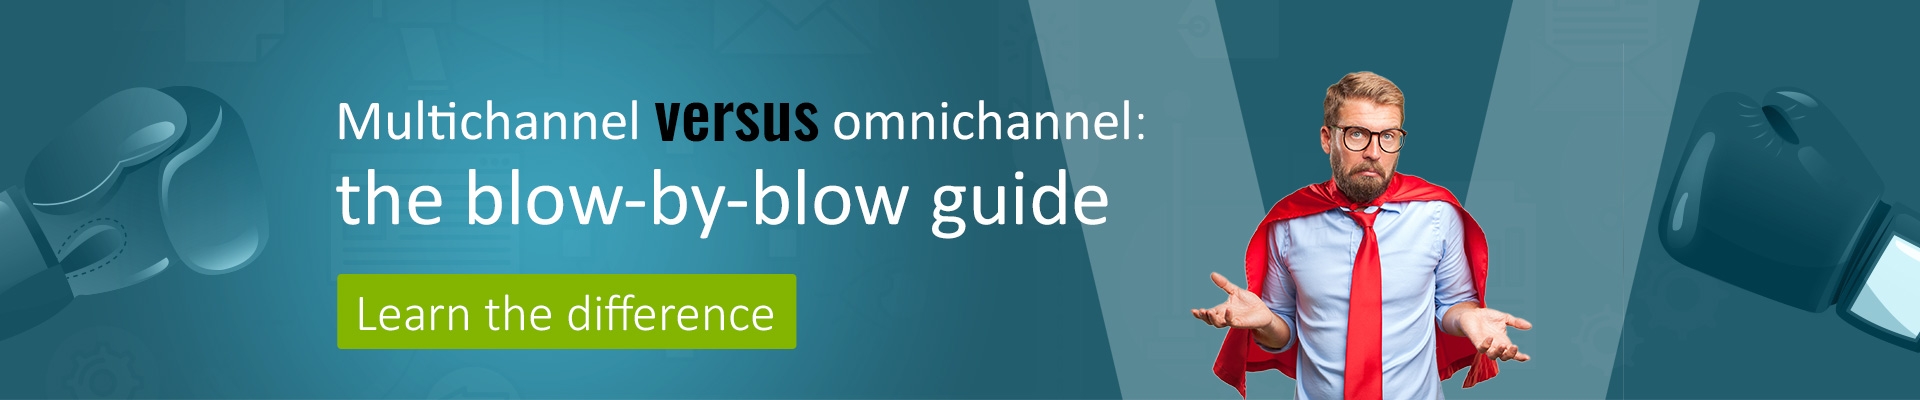 Multichannel versus omnichannel: the blow by blow guide